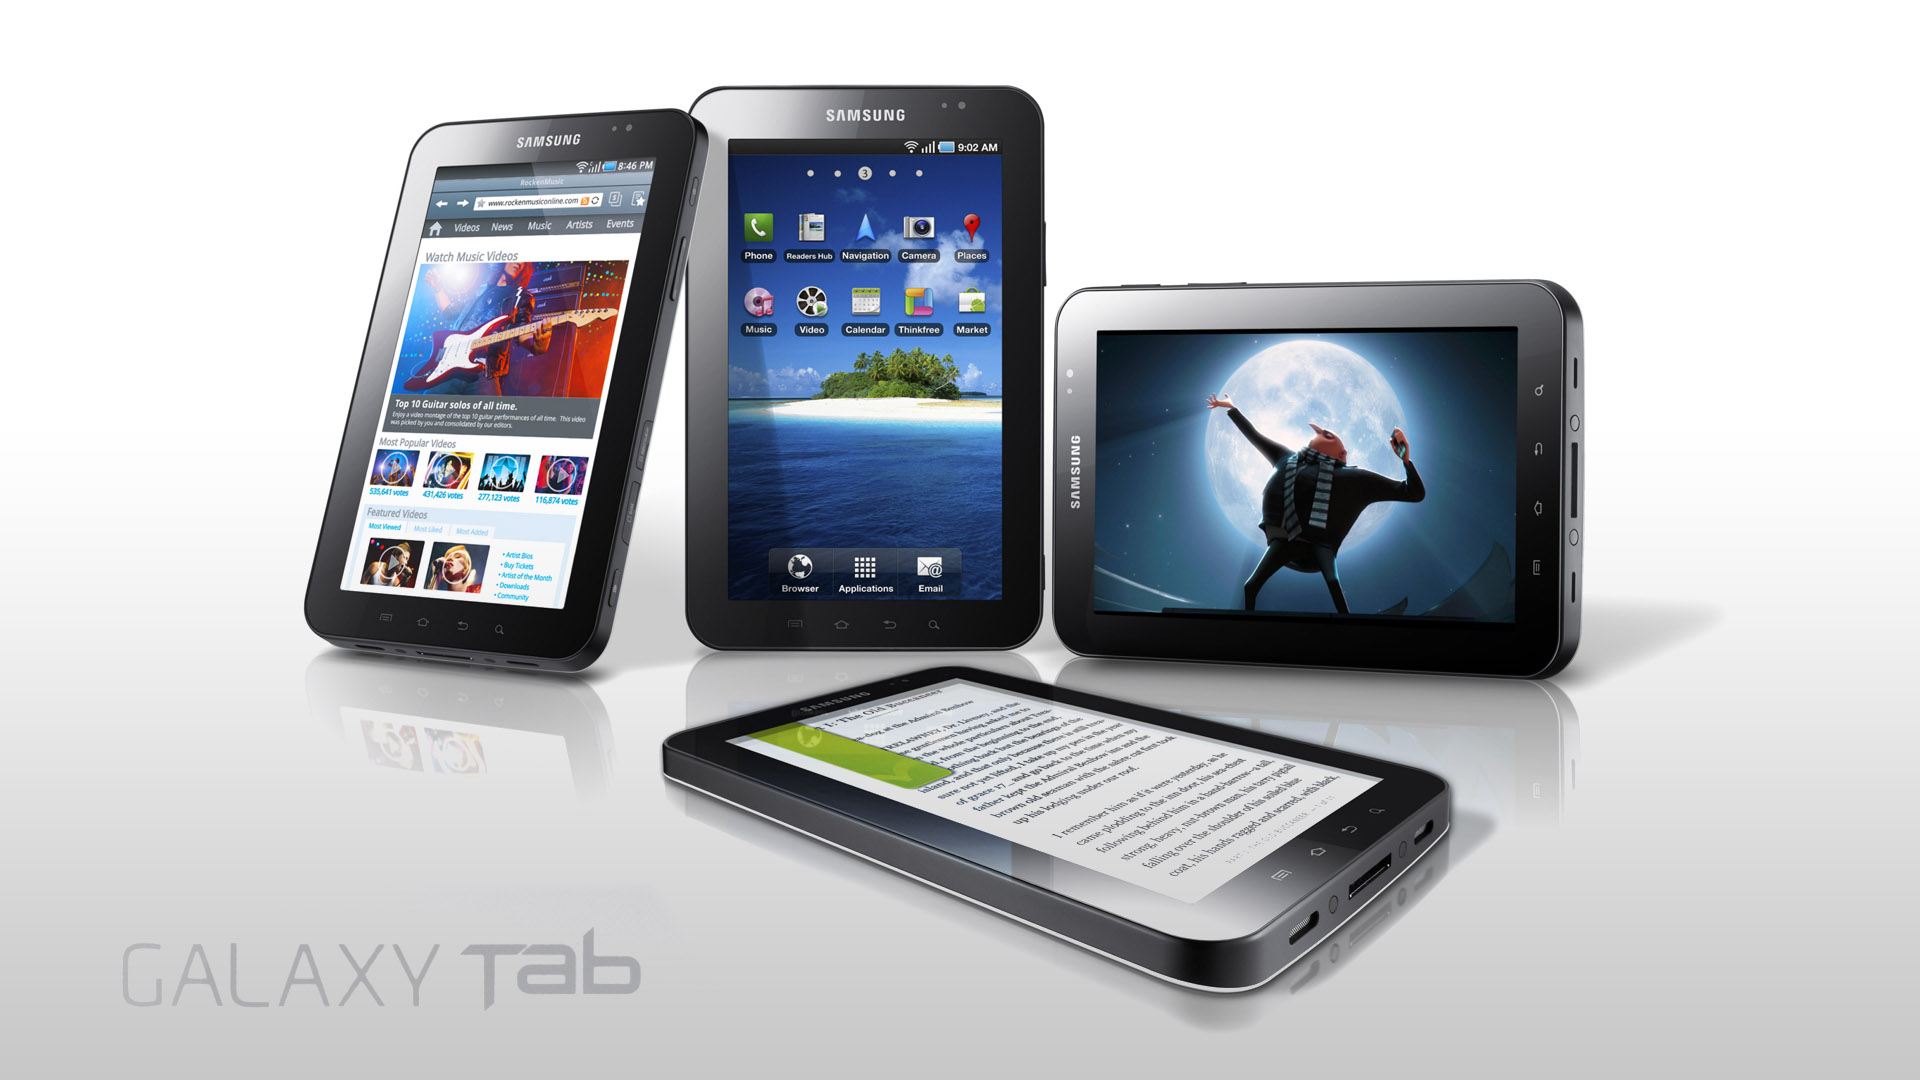 Samsung Galaxy Tab 1920x1080 HD Image Gadgets 1920x1080